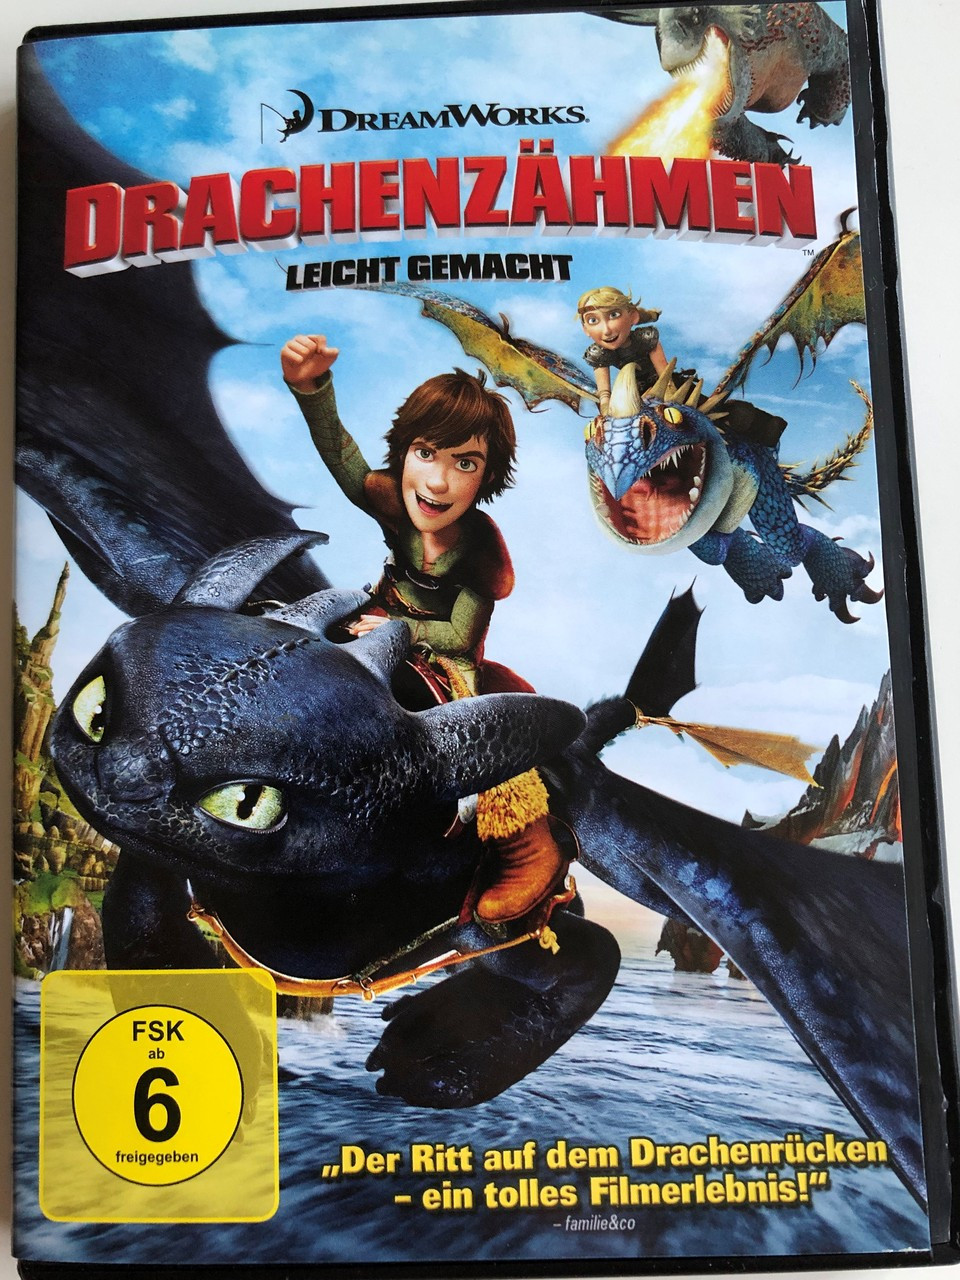 How To Train Your Dragon Dvd 10 Drachenzahmen Leicht Gemacht Directed By Chris Sanders Dean Deblois